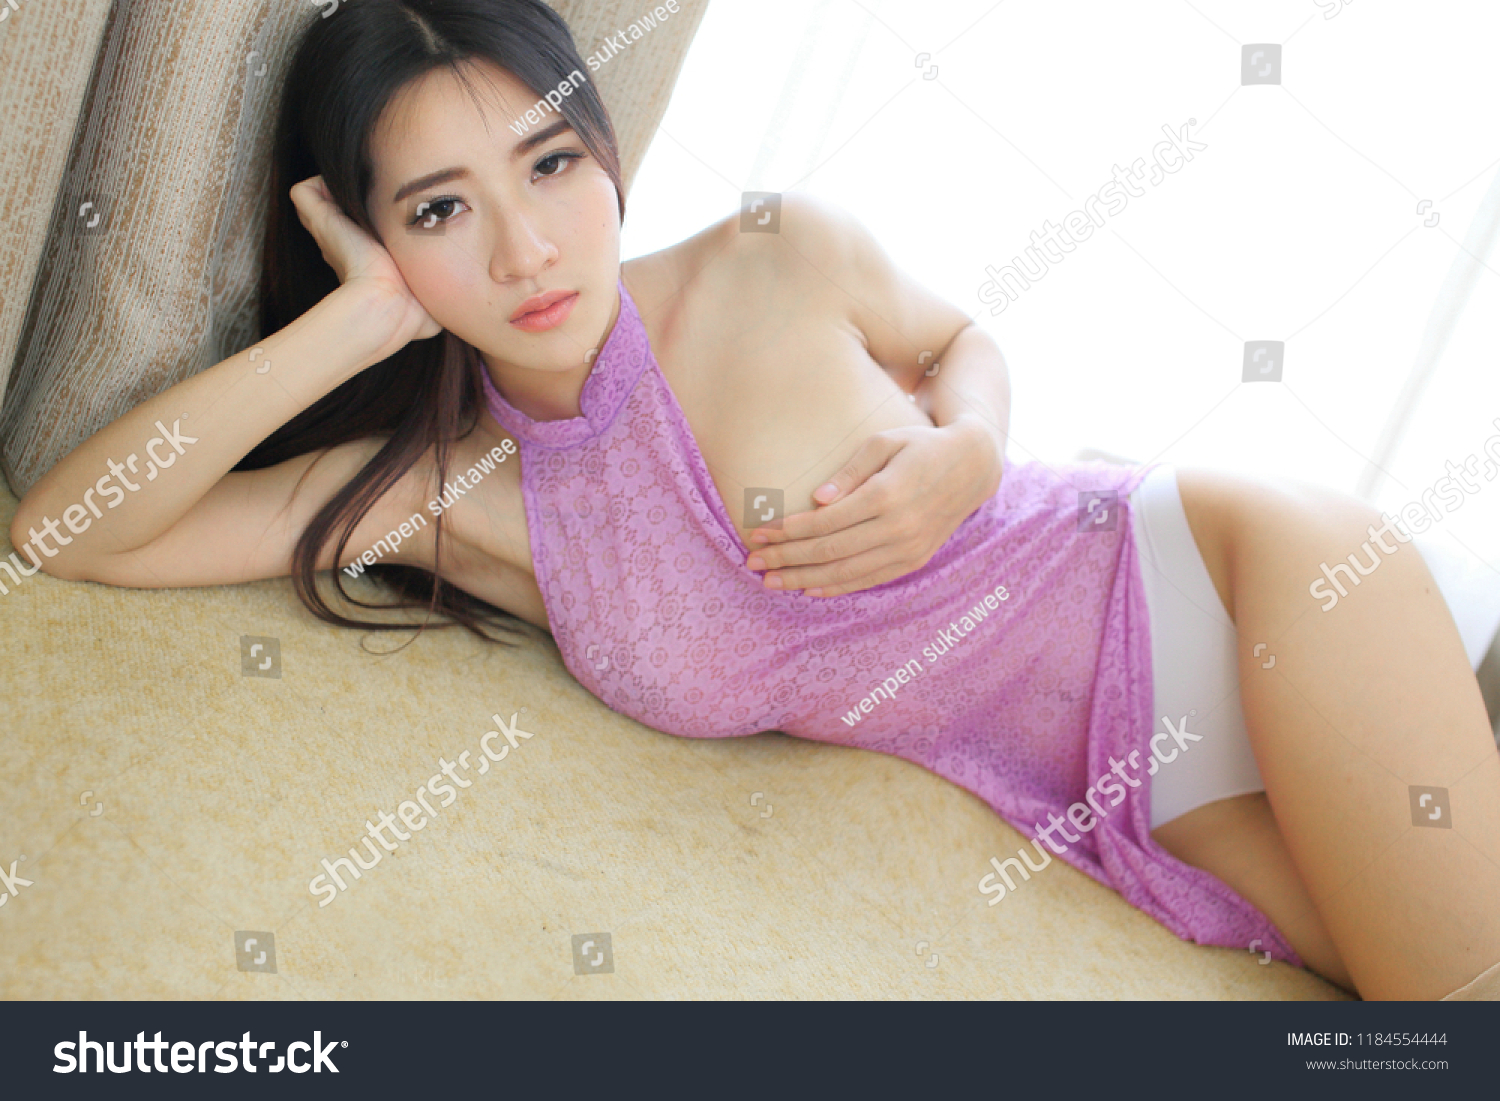 Hot Nude Asian Teen Girls